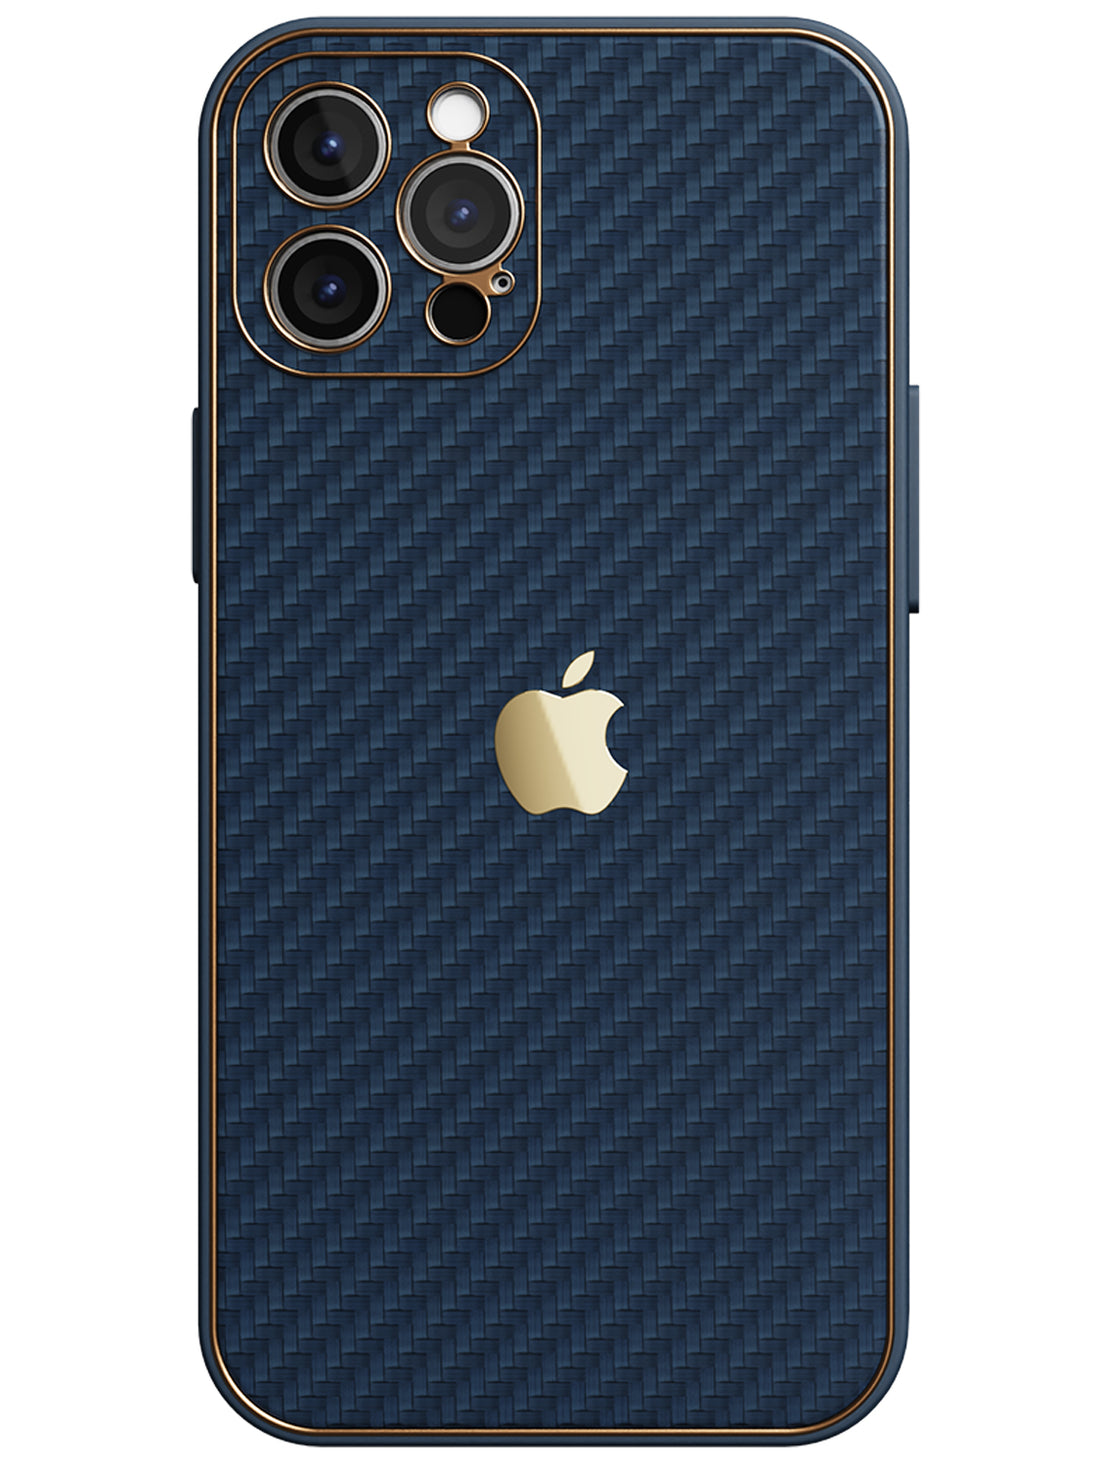 Carbon Leather Chrome Case - iPhone 12 Pro (Navy Blue)